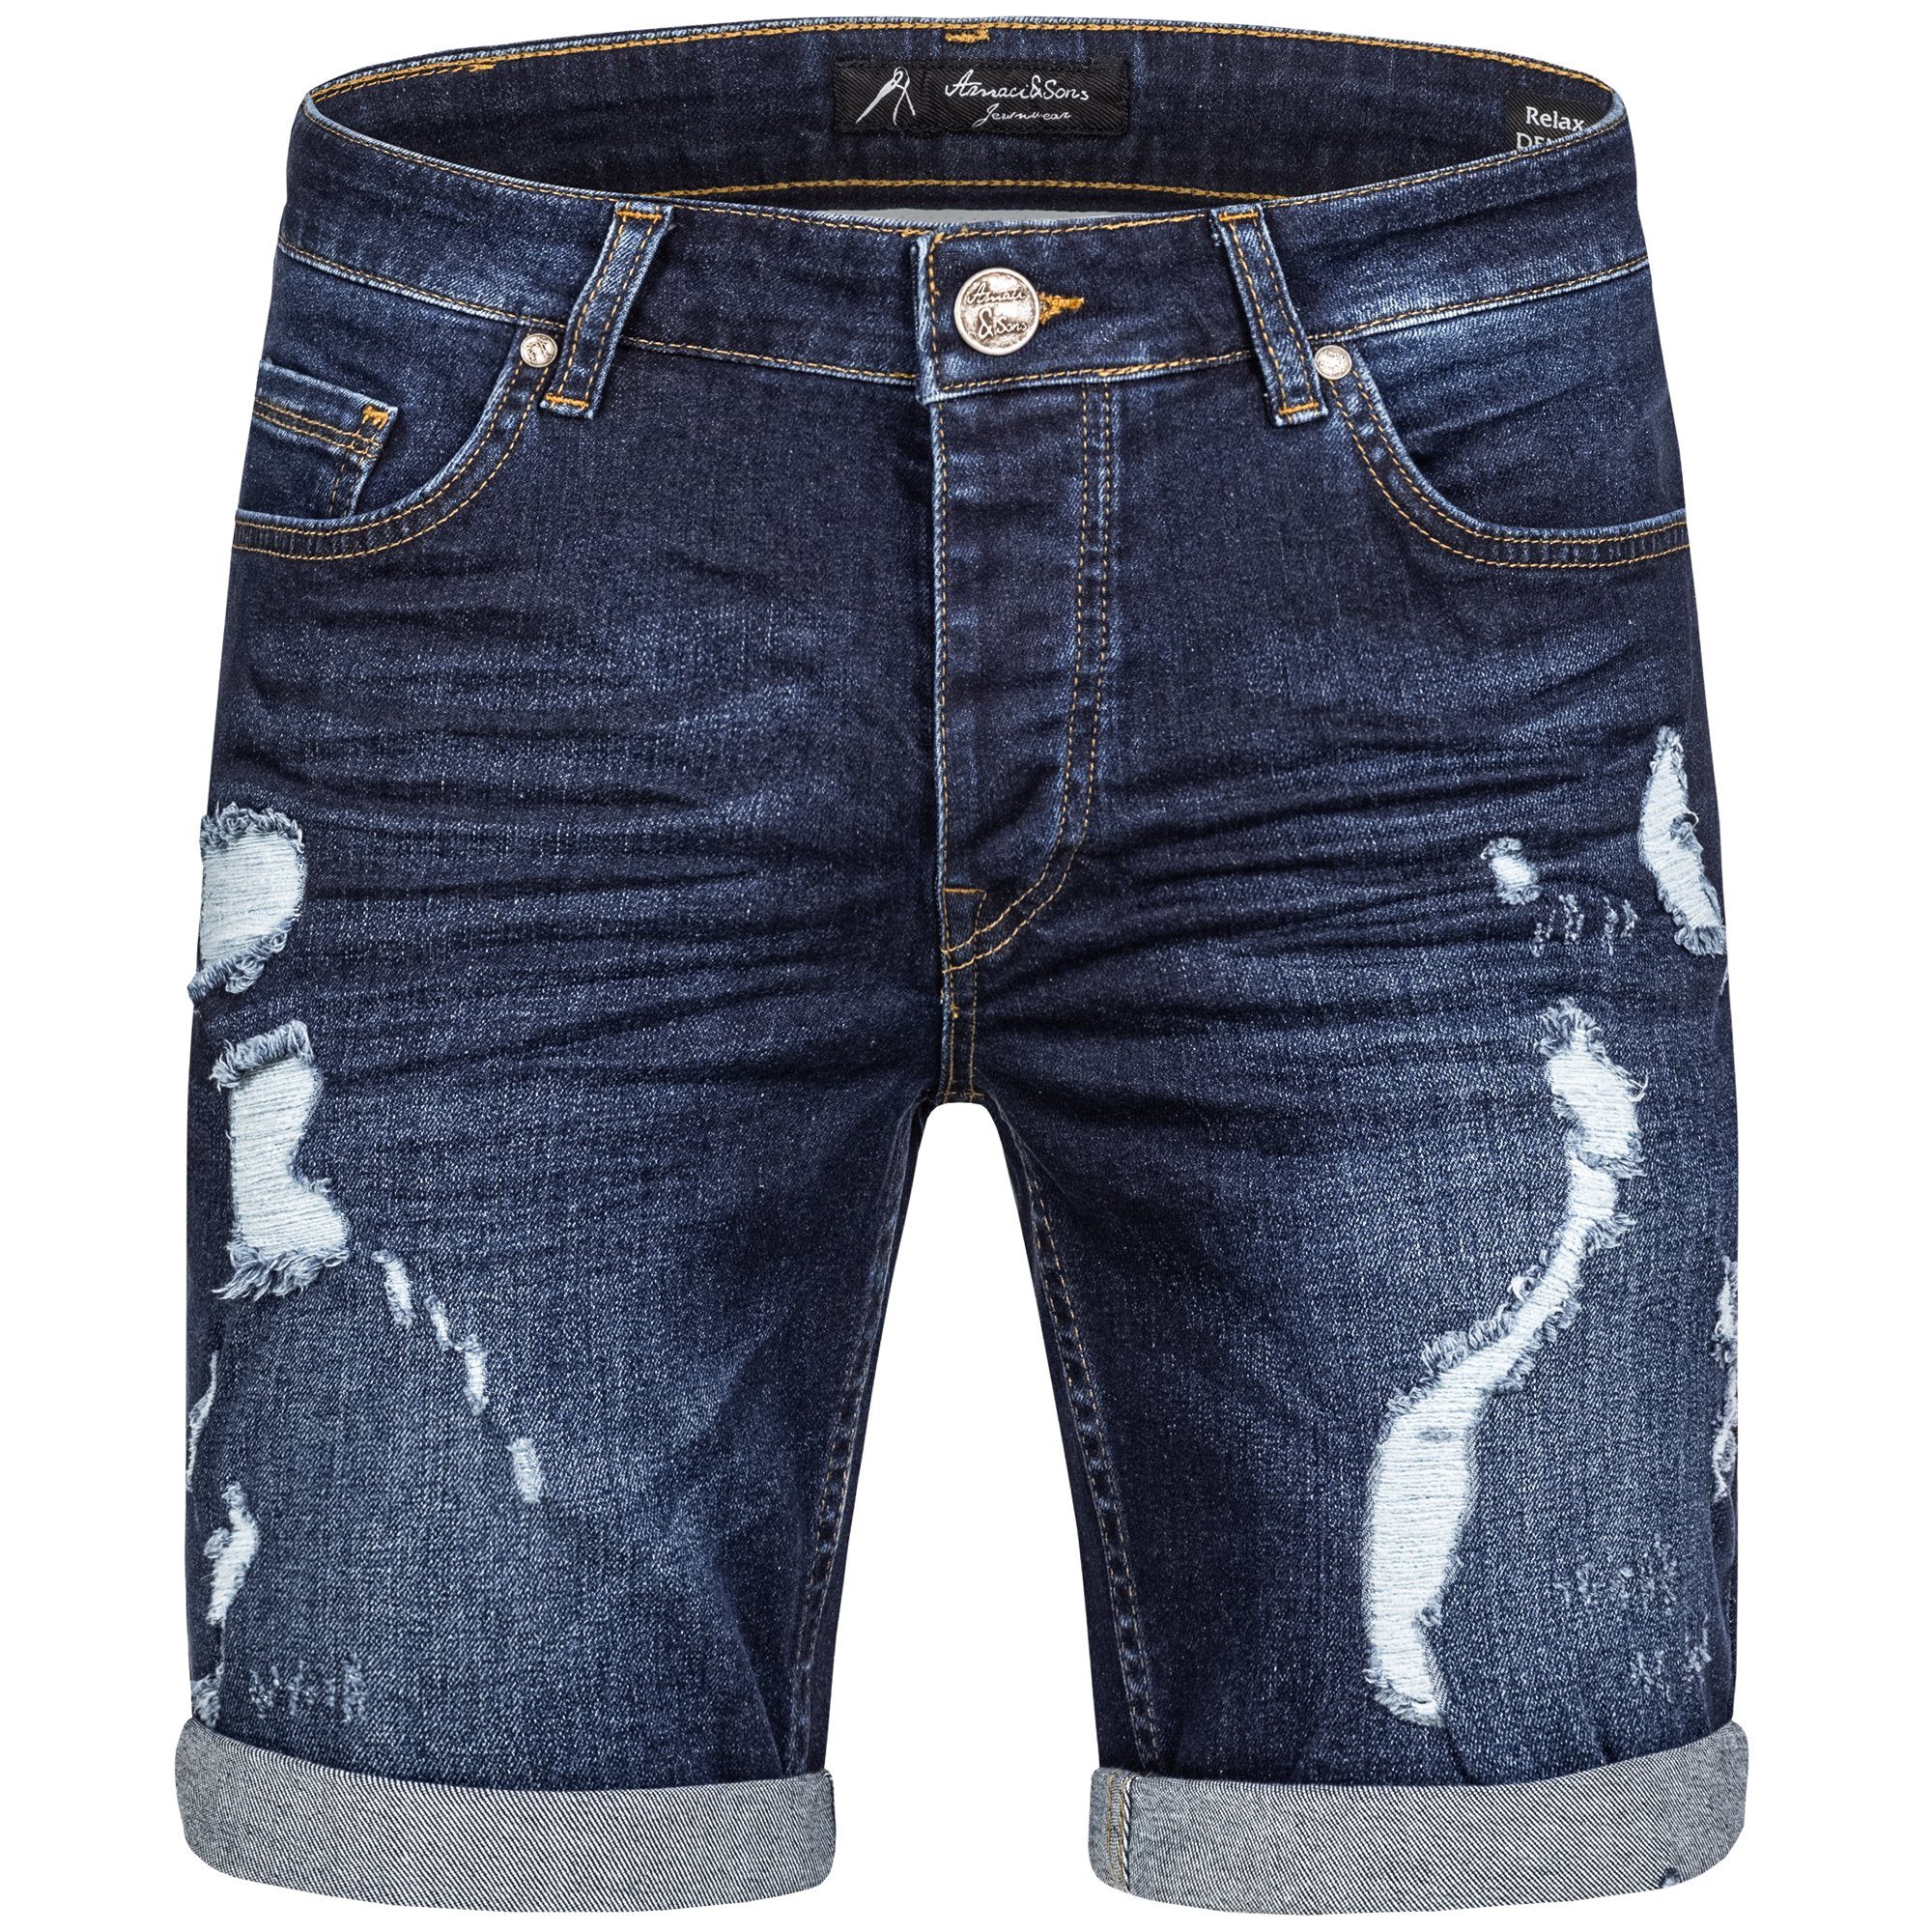 Jeans SAN Jeansshorts Amaci&Sons Destroyed Dunkelblau DIEGO Shorts